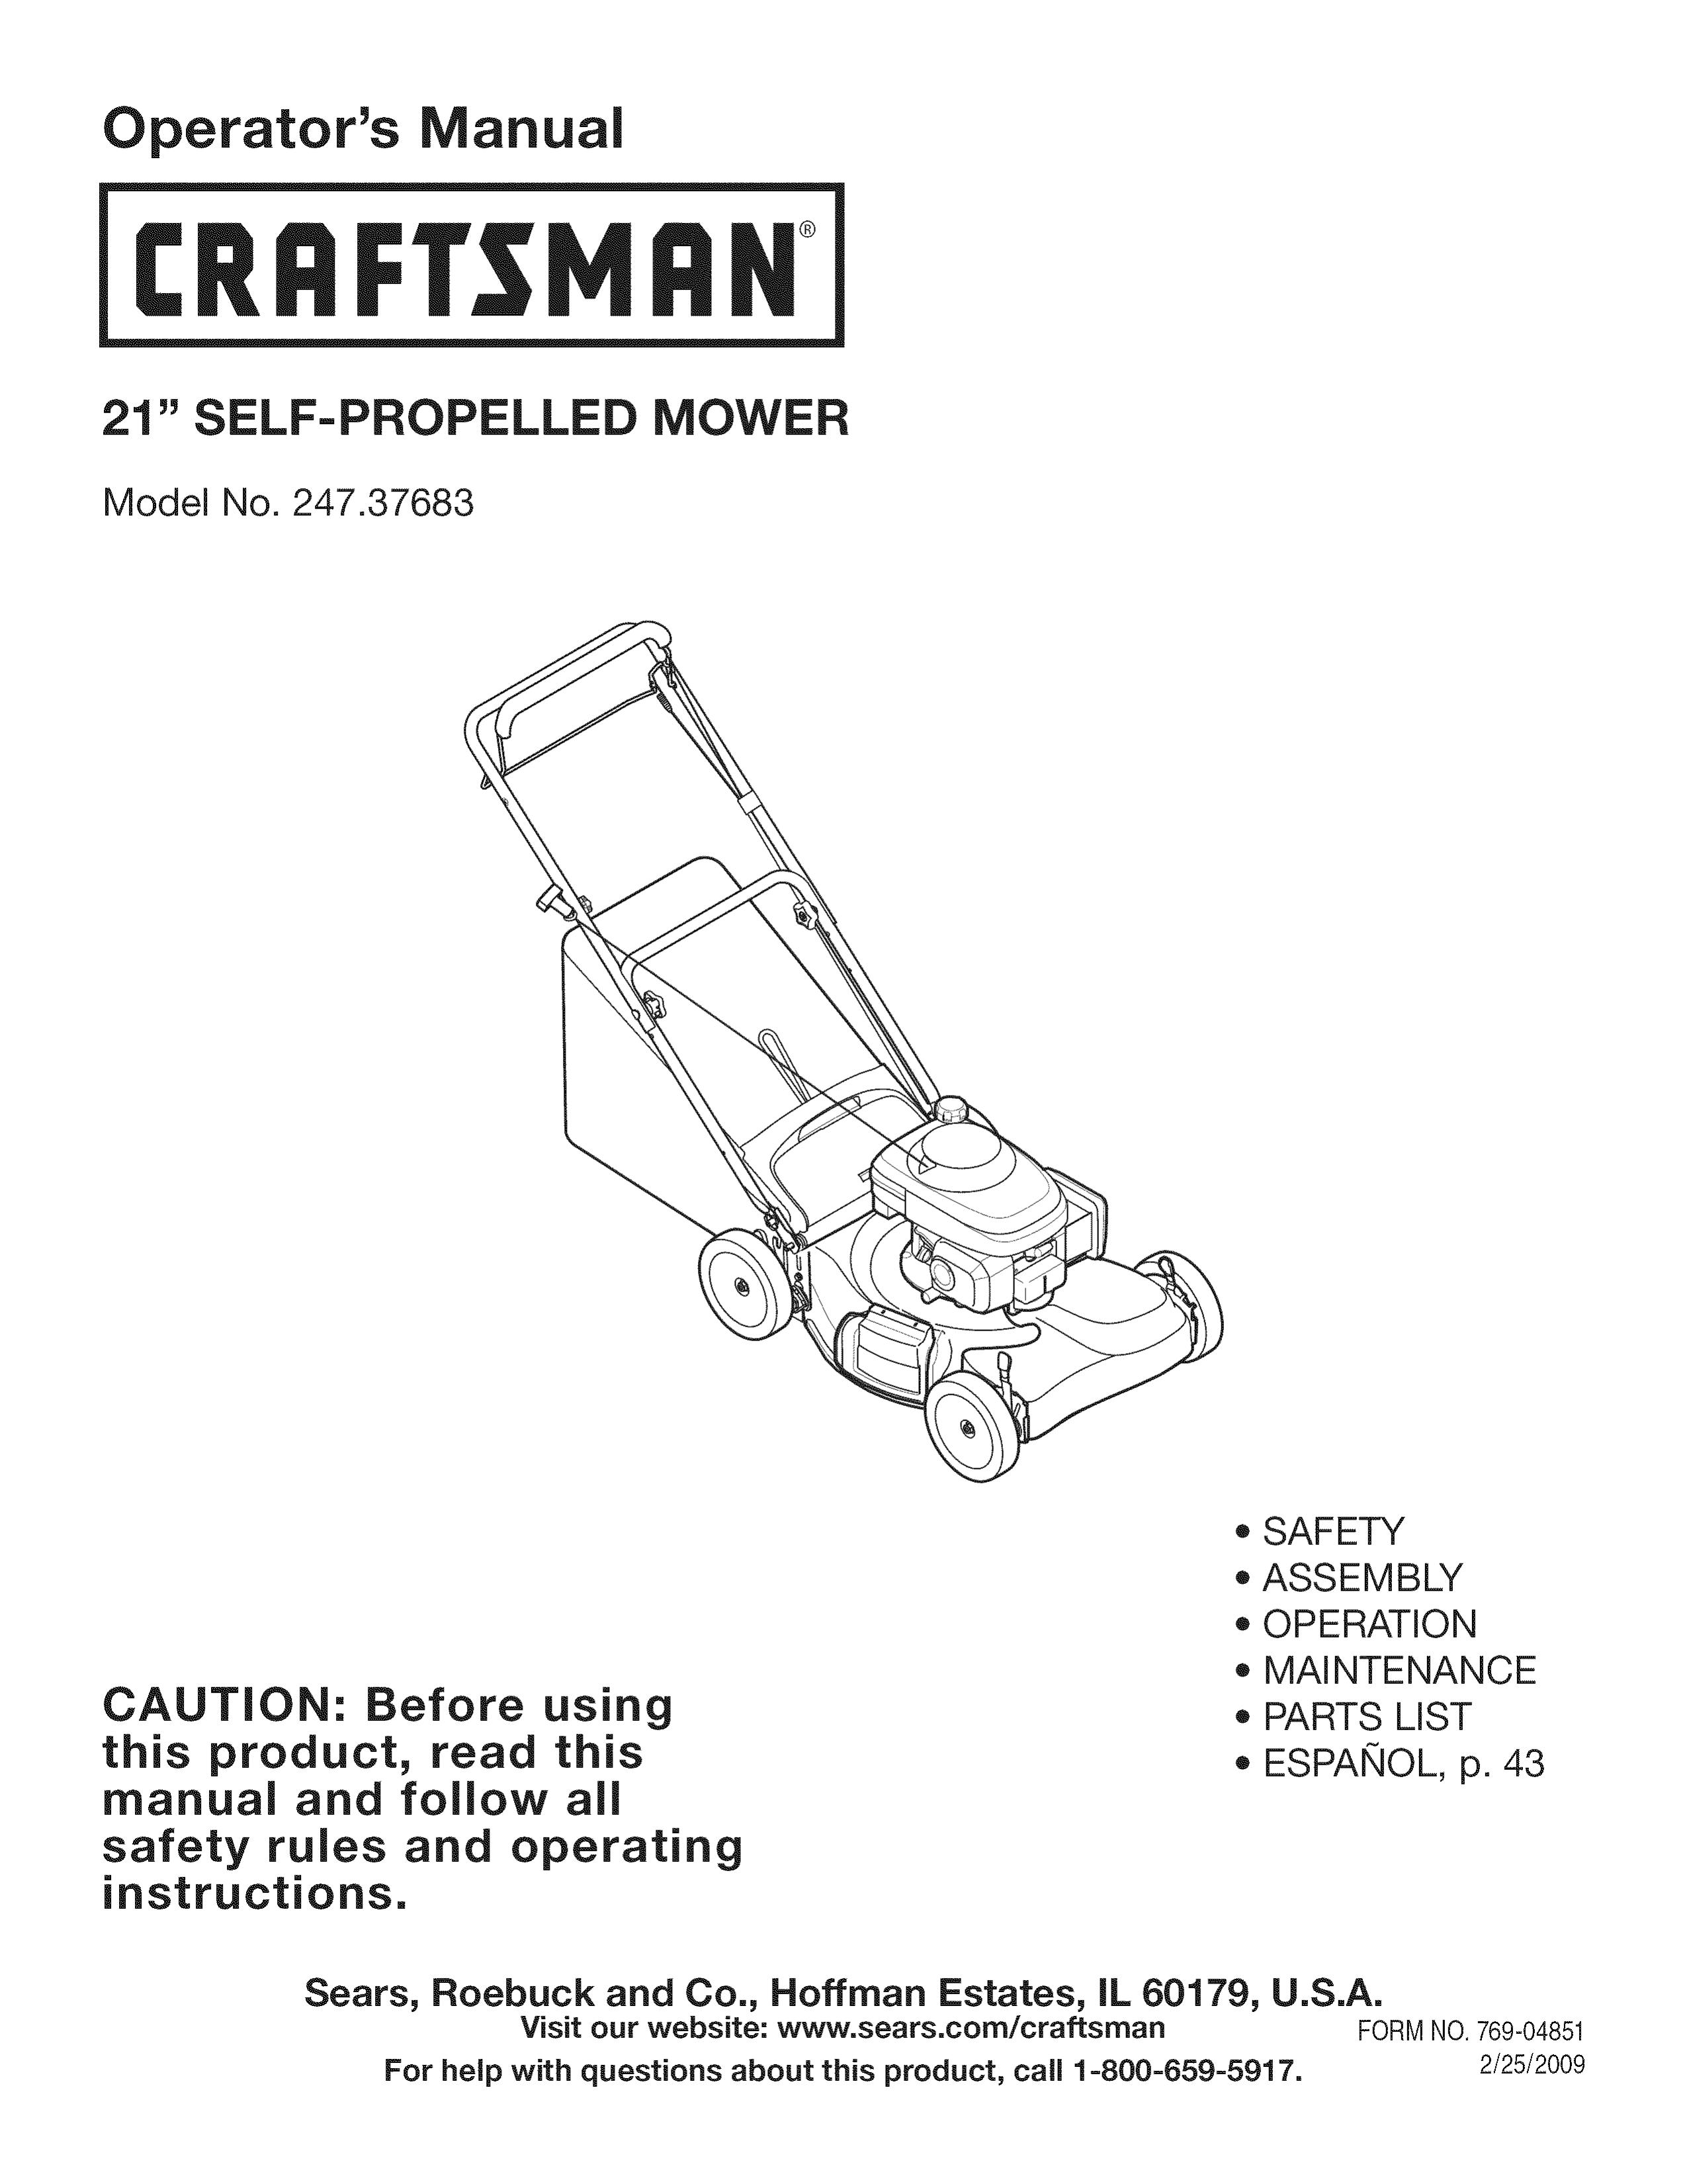 Craftsman 247.37683 Lawn Mower User Manual